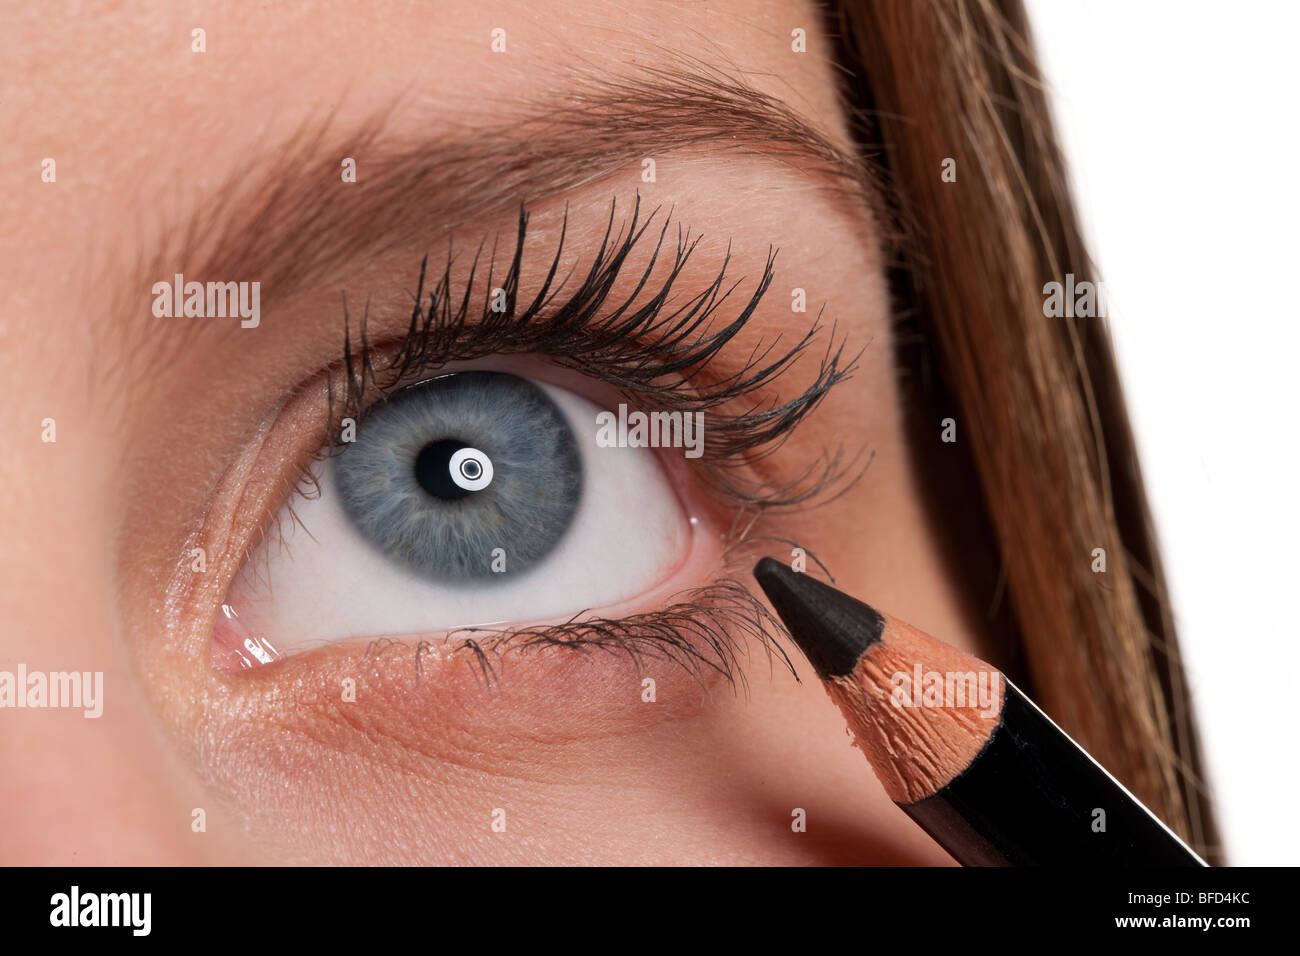 Close-up of blue eye, woman applying black make-up pencil, macro lens Stock Photo